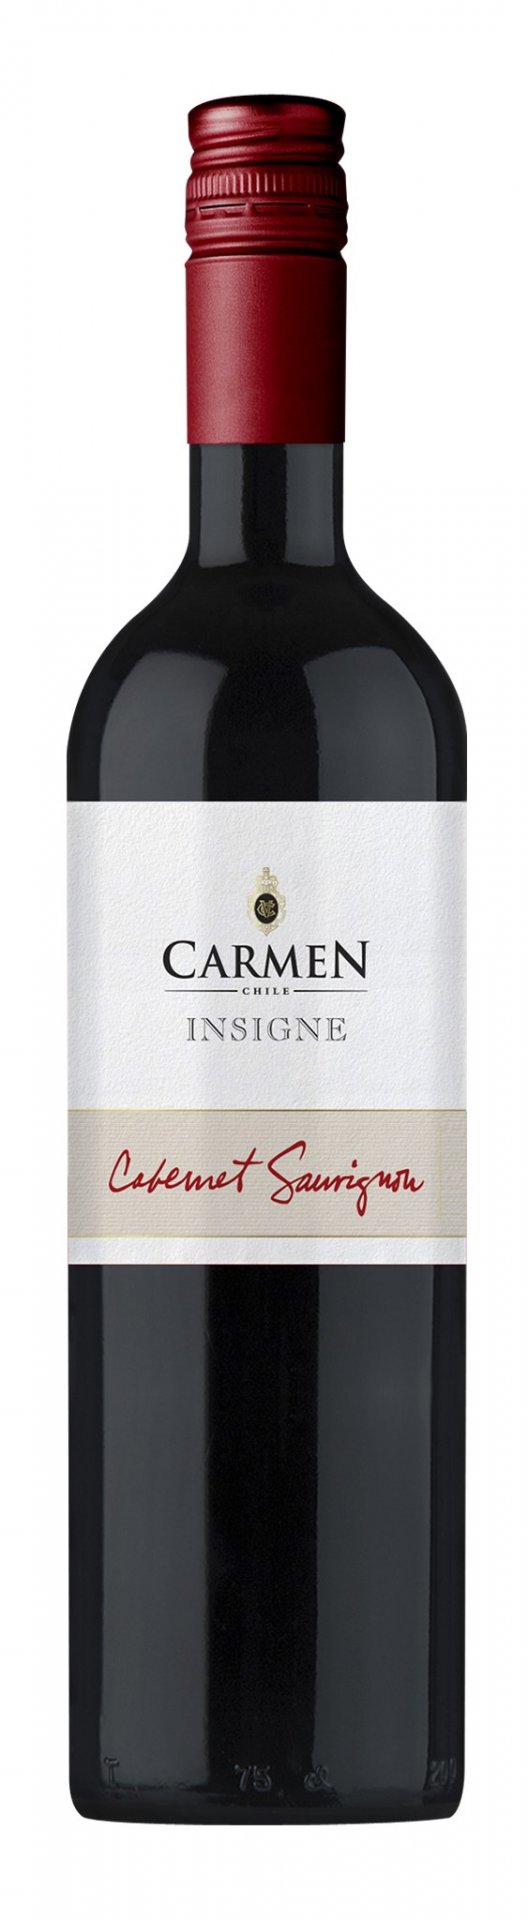 Carmen Insigne Cabernet Savignon